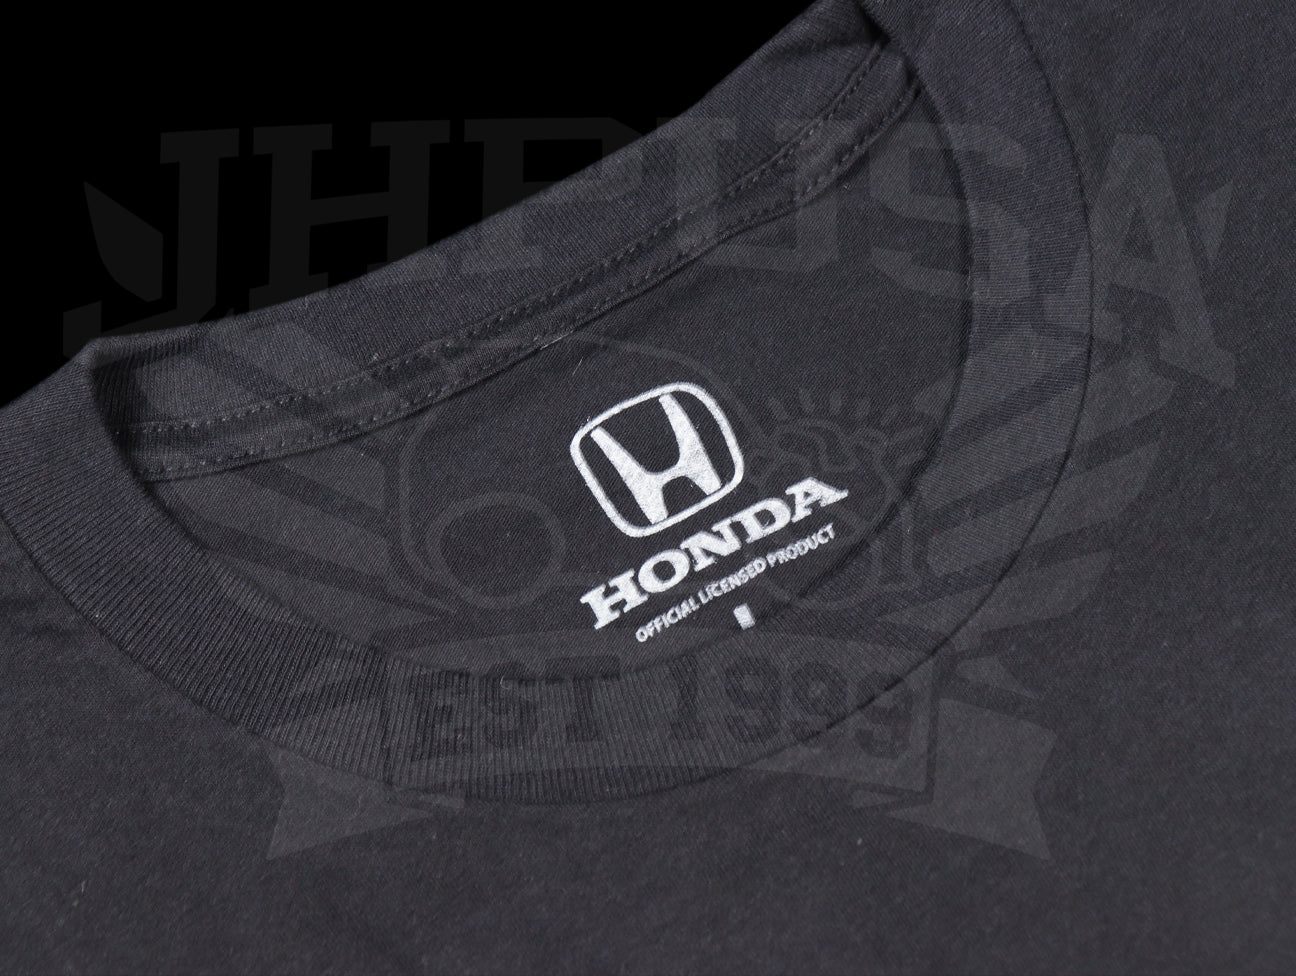 Official Licensed - Honda Civic Type-R Illustrated T-Shirt - Black